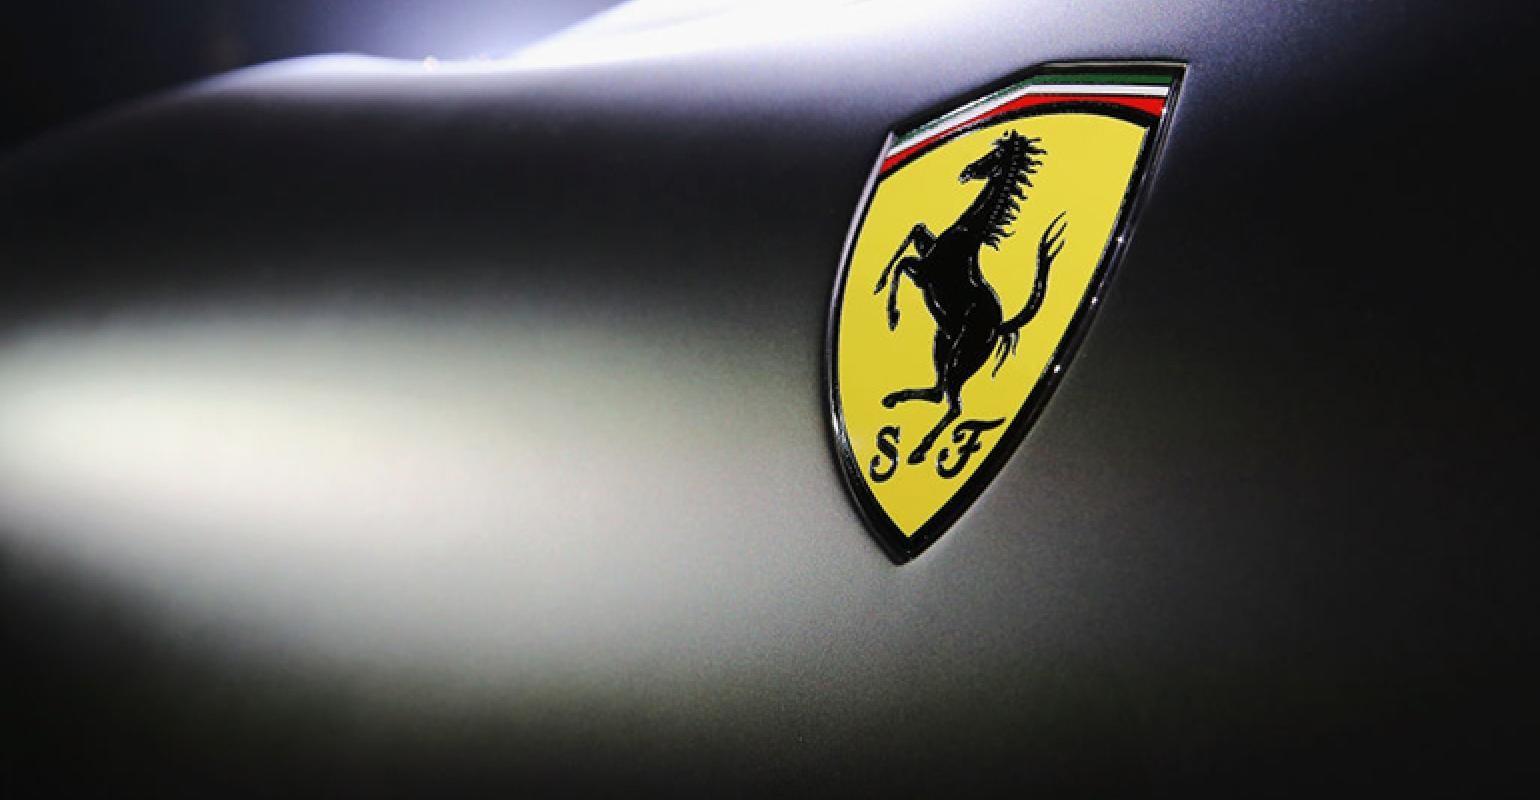 Ferrari Logo - Ferrari Considers Adding Utility Vehicle | Luxury SUV | IndustryWeek